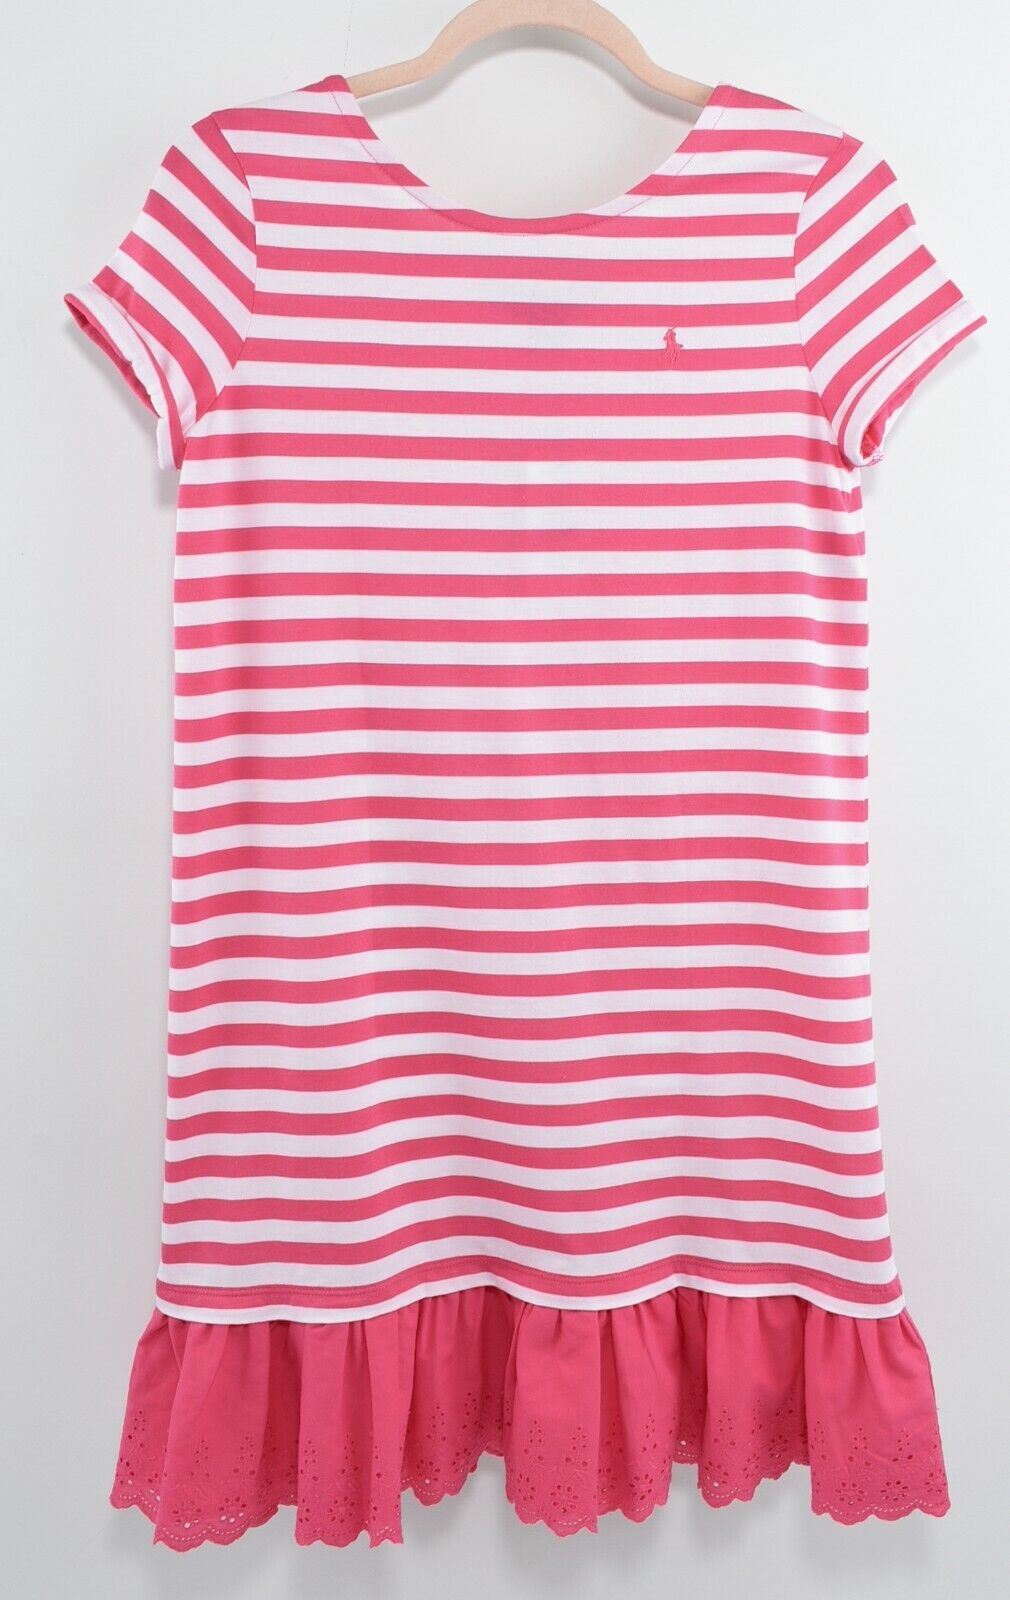 POLO RALPH LAUREN Girls' Pink Striped T-shirt Dress, Ruffle Hem, size 16 years